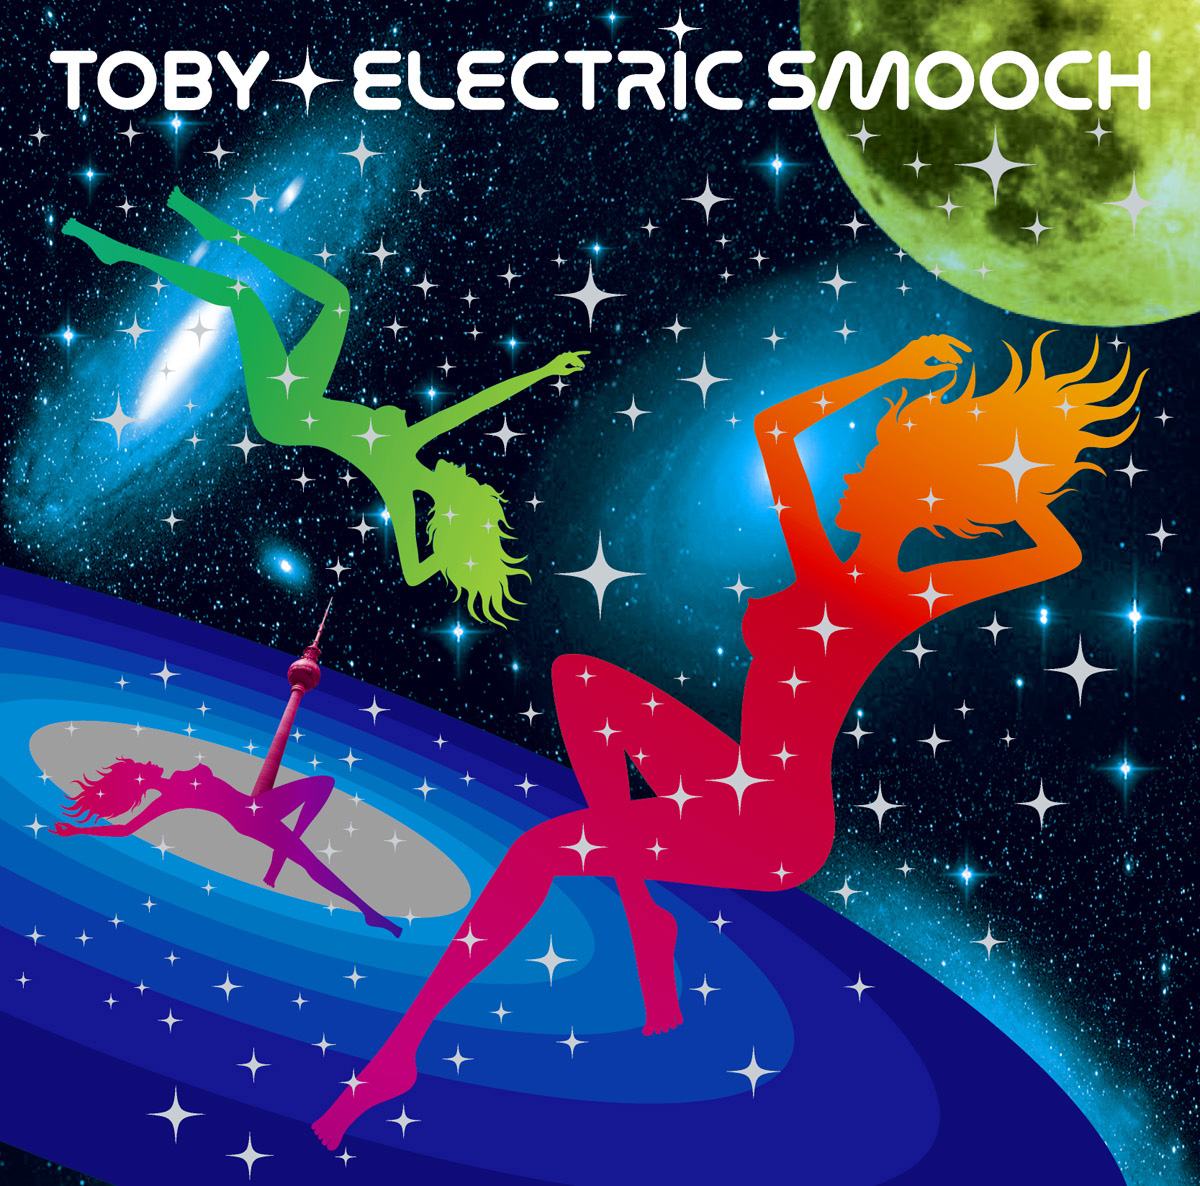 Toby “Electric Smooch”